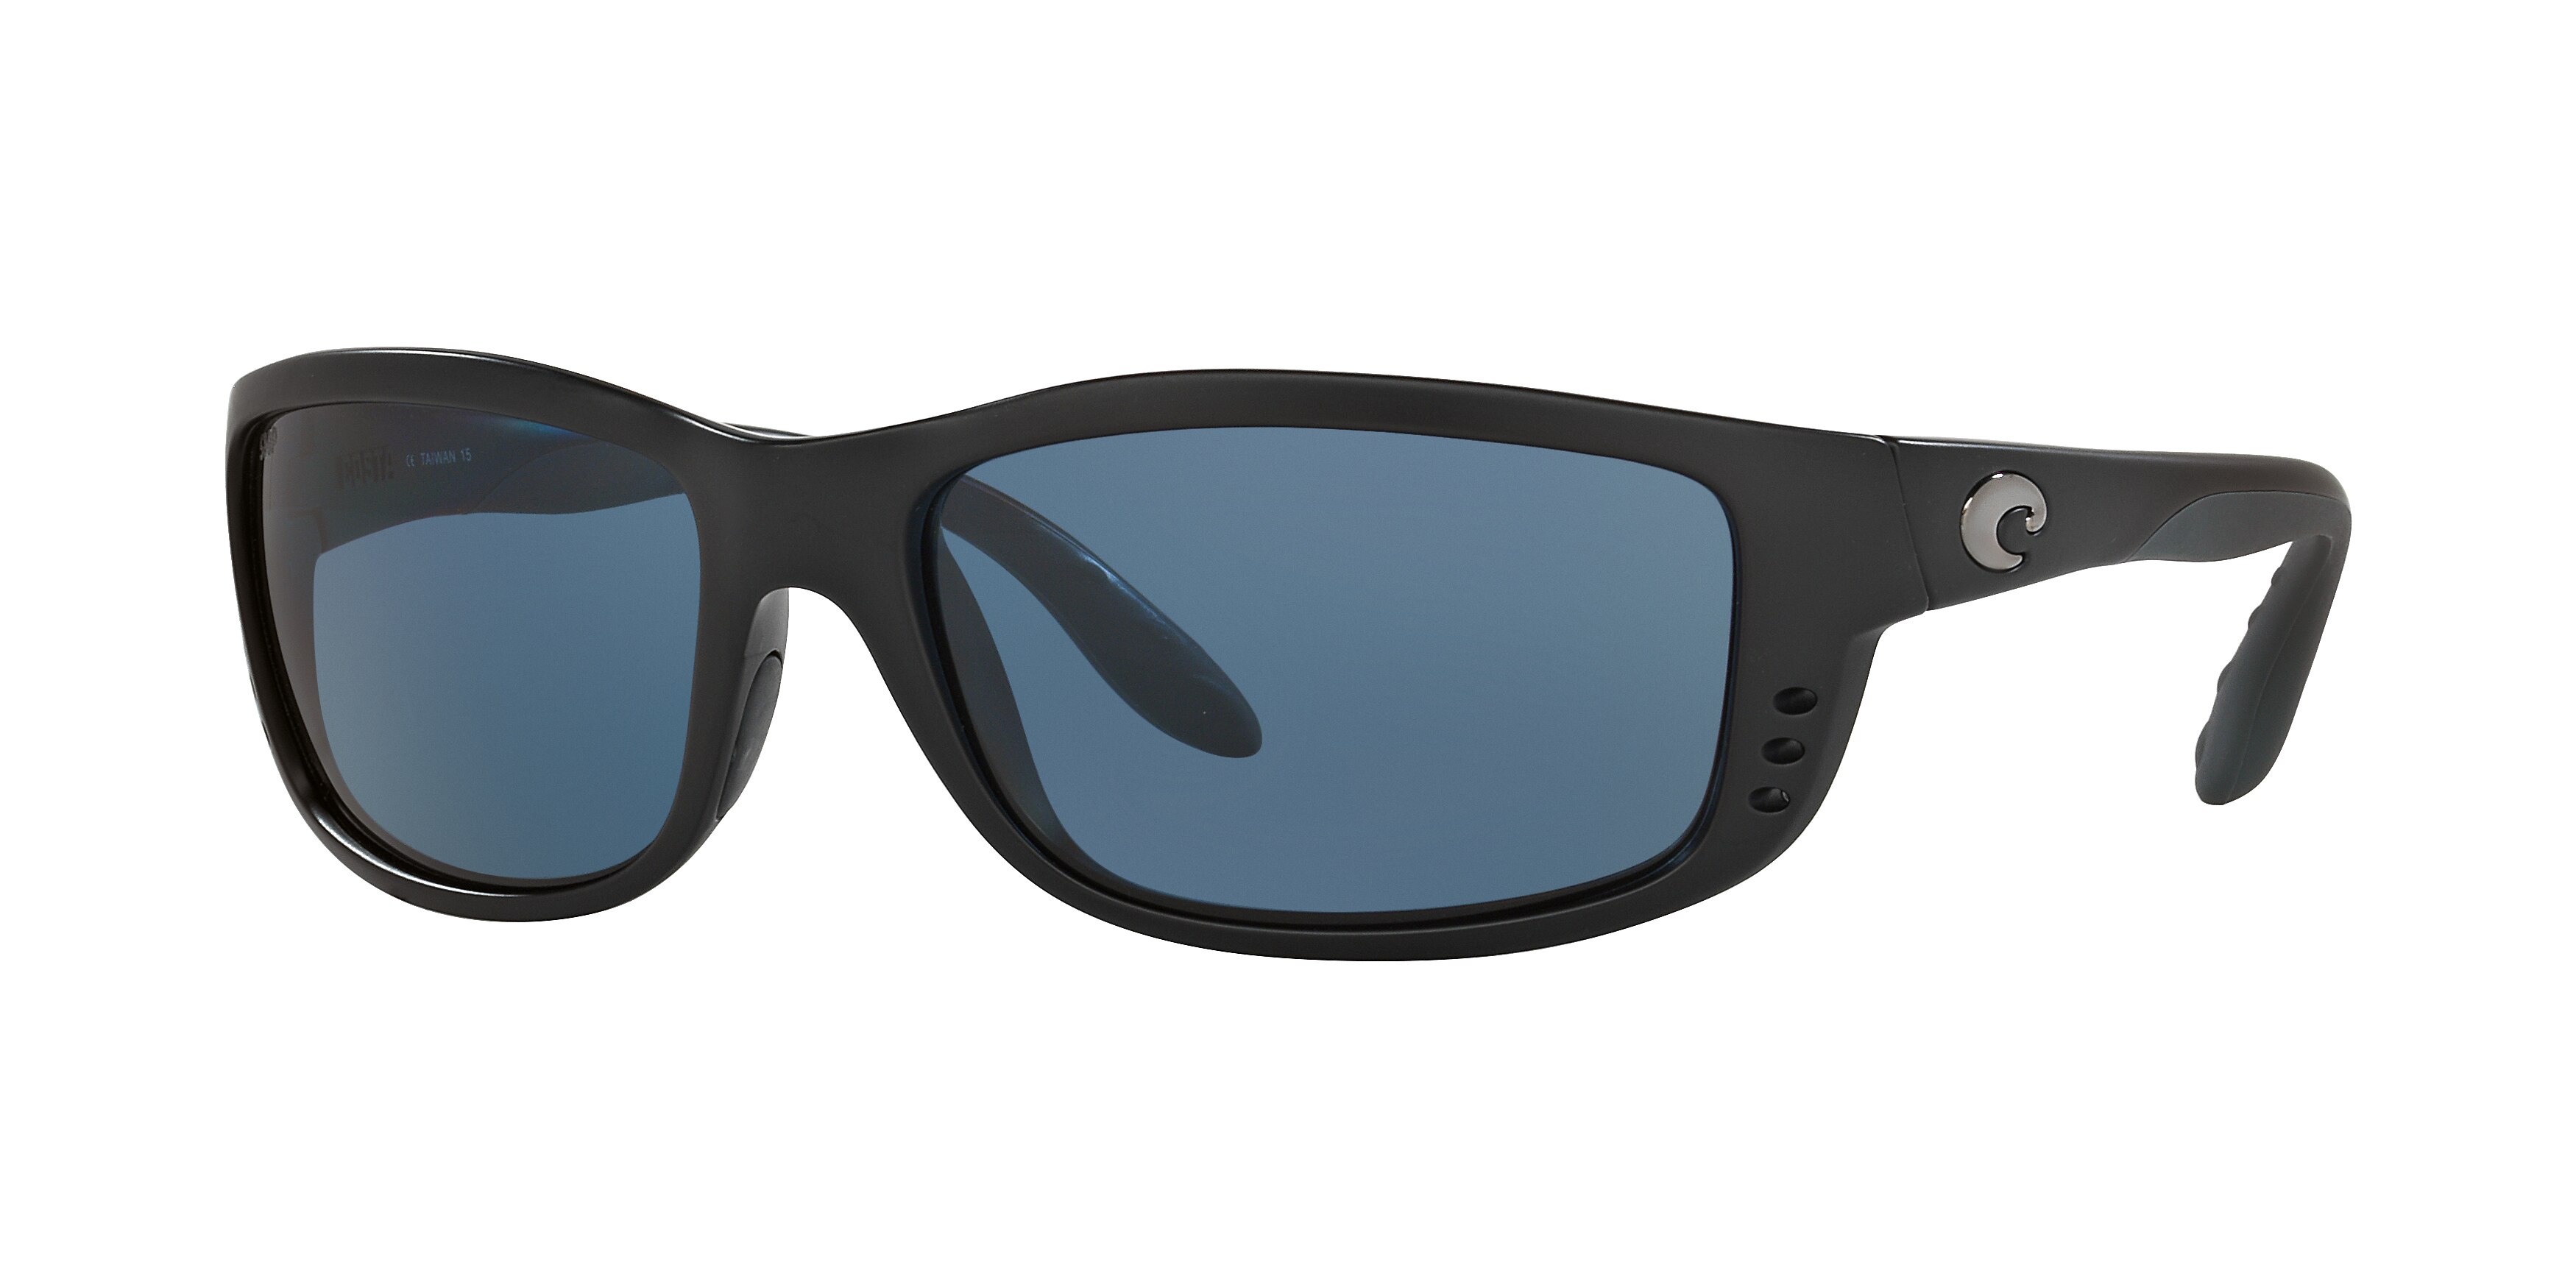 Buy Costa Del Mar Sunglasses directly from OpticsFast.com